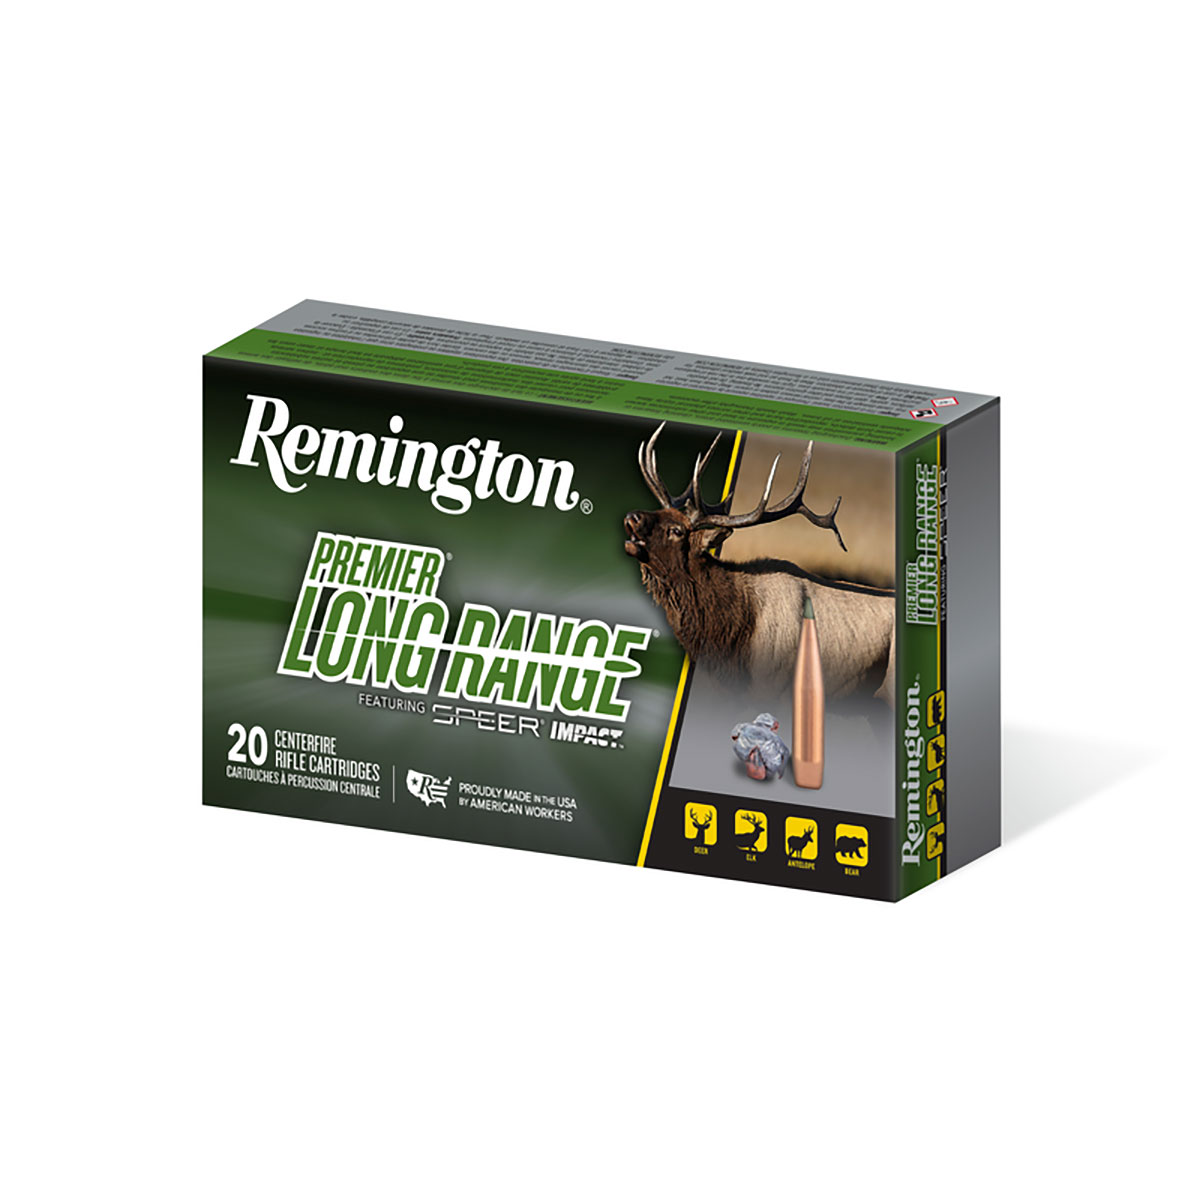 REMINGTON - PREMIER LONG RANGE 30-06 SPRINGFIELD RIFLE AMMO